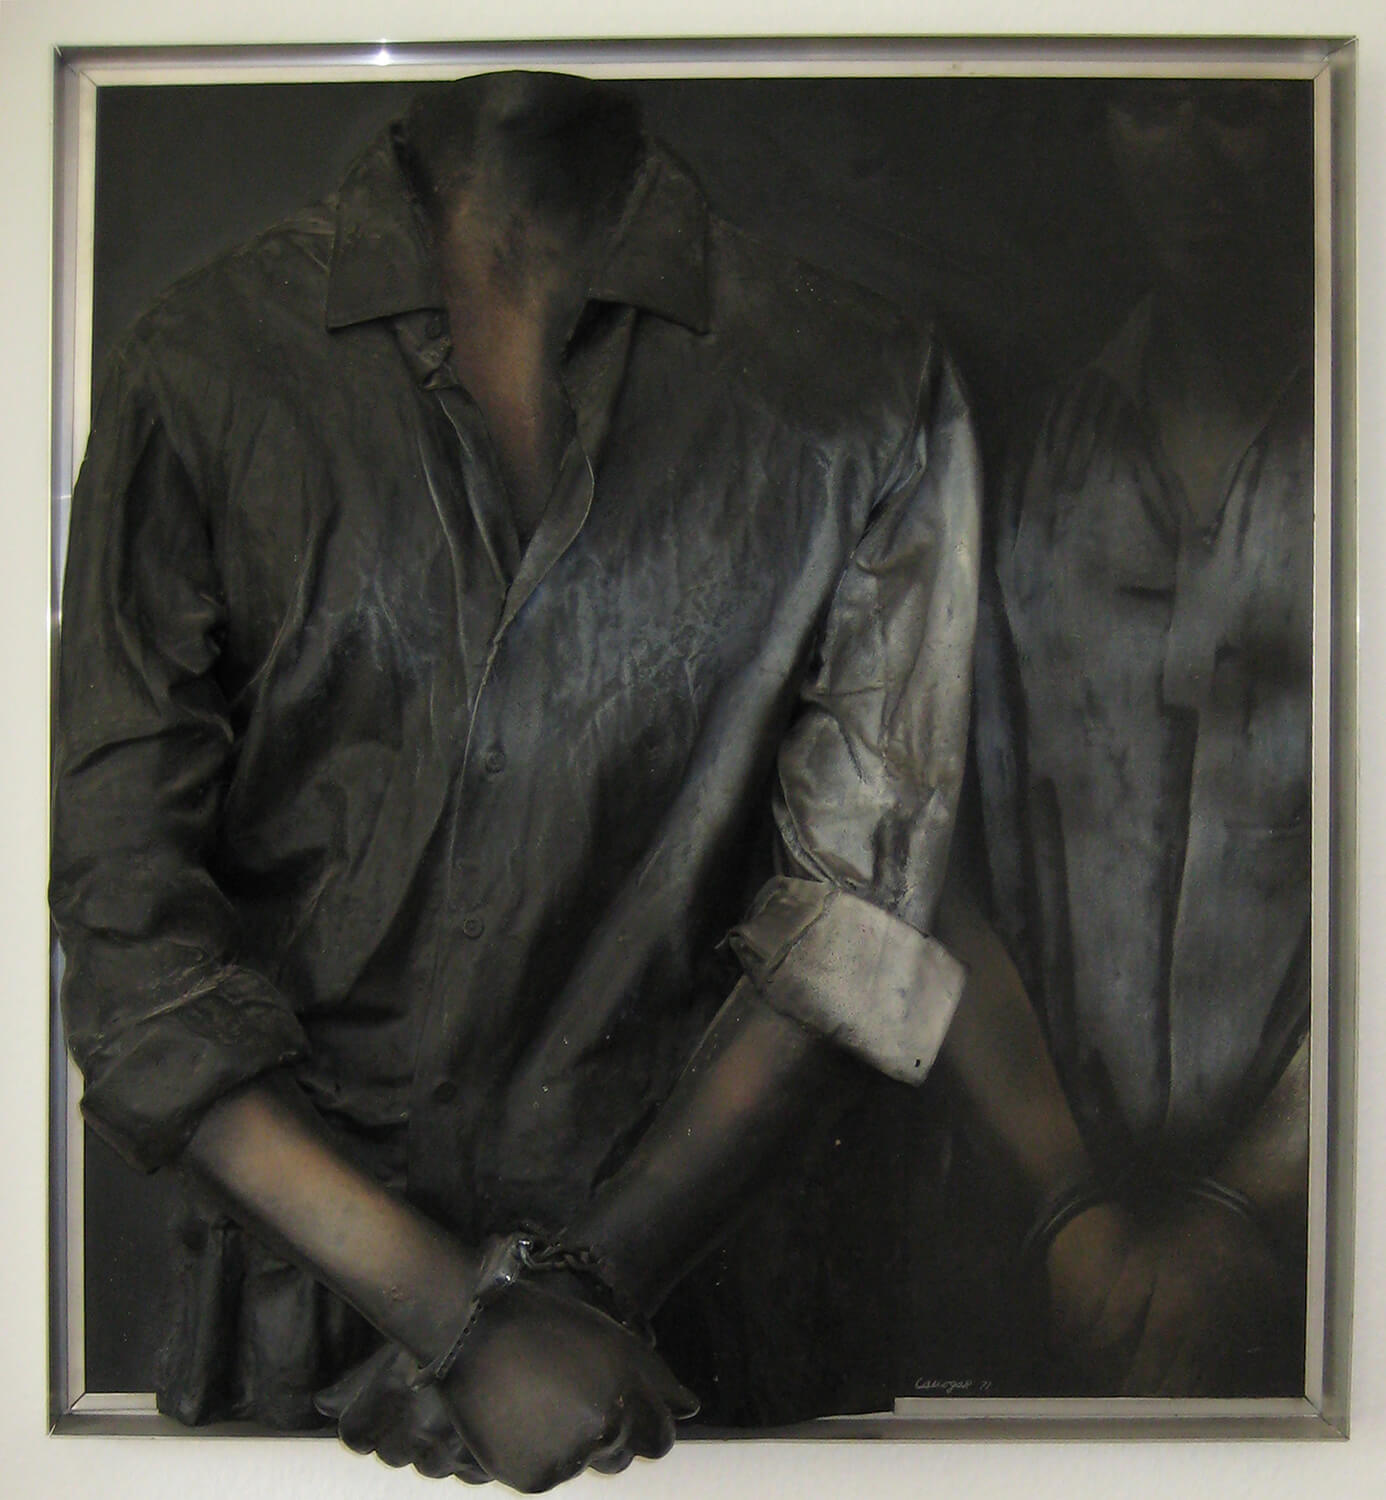 Rafael Canogar, Il Reo, 1971, mixed media on wood, 75 x 70 cm